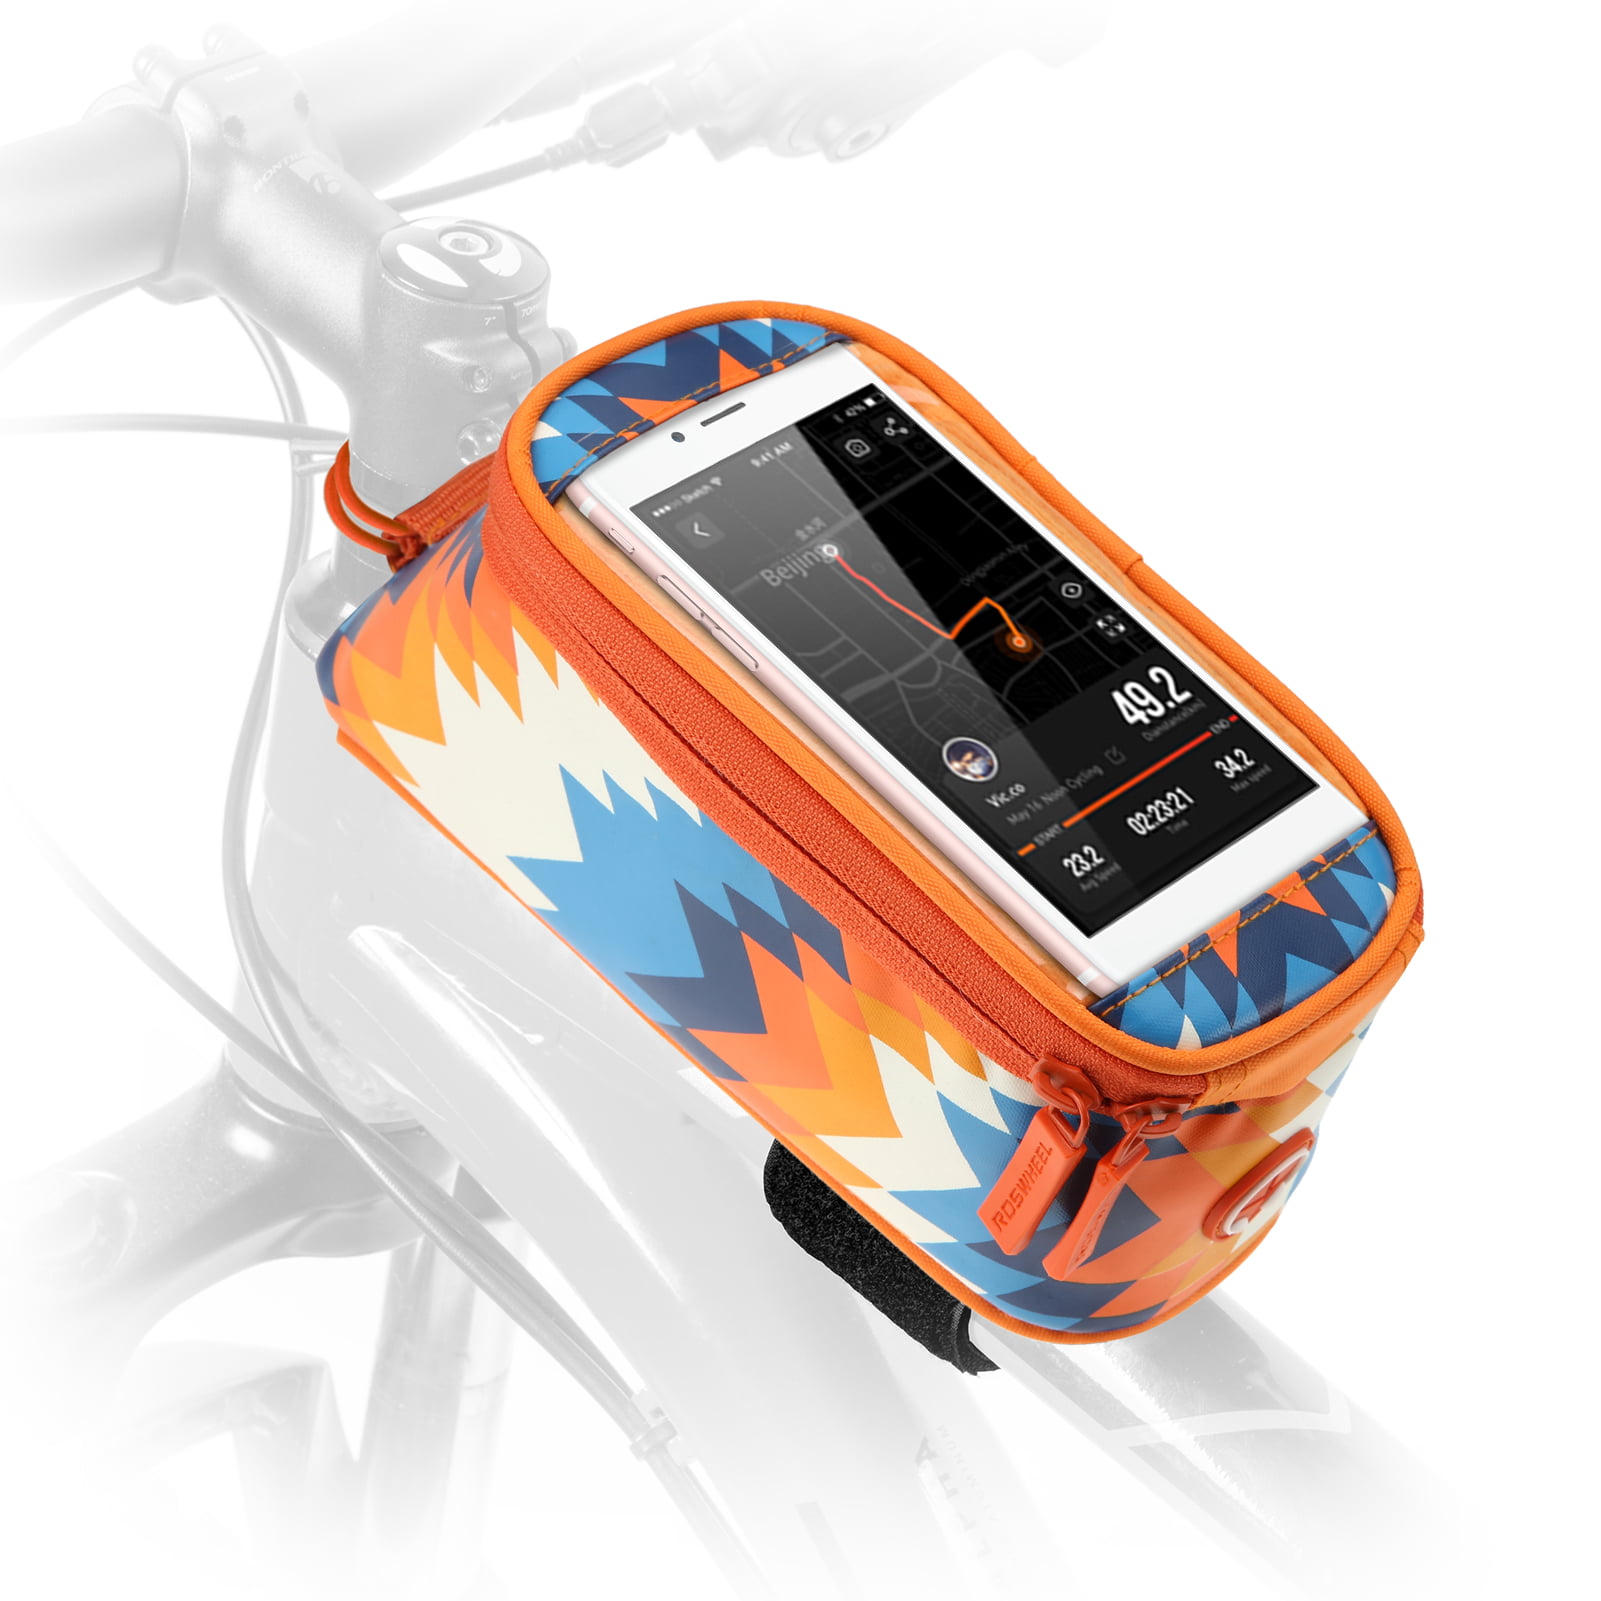 ROSWHEEL HARD SHELL SMART PHONE MOUNT HOLDER bike iPhone Galaxy frame bag case 